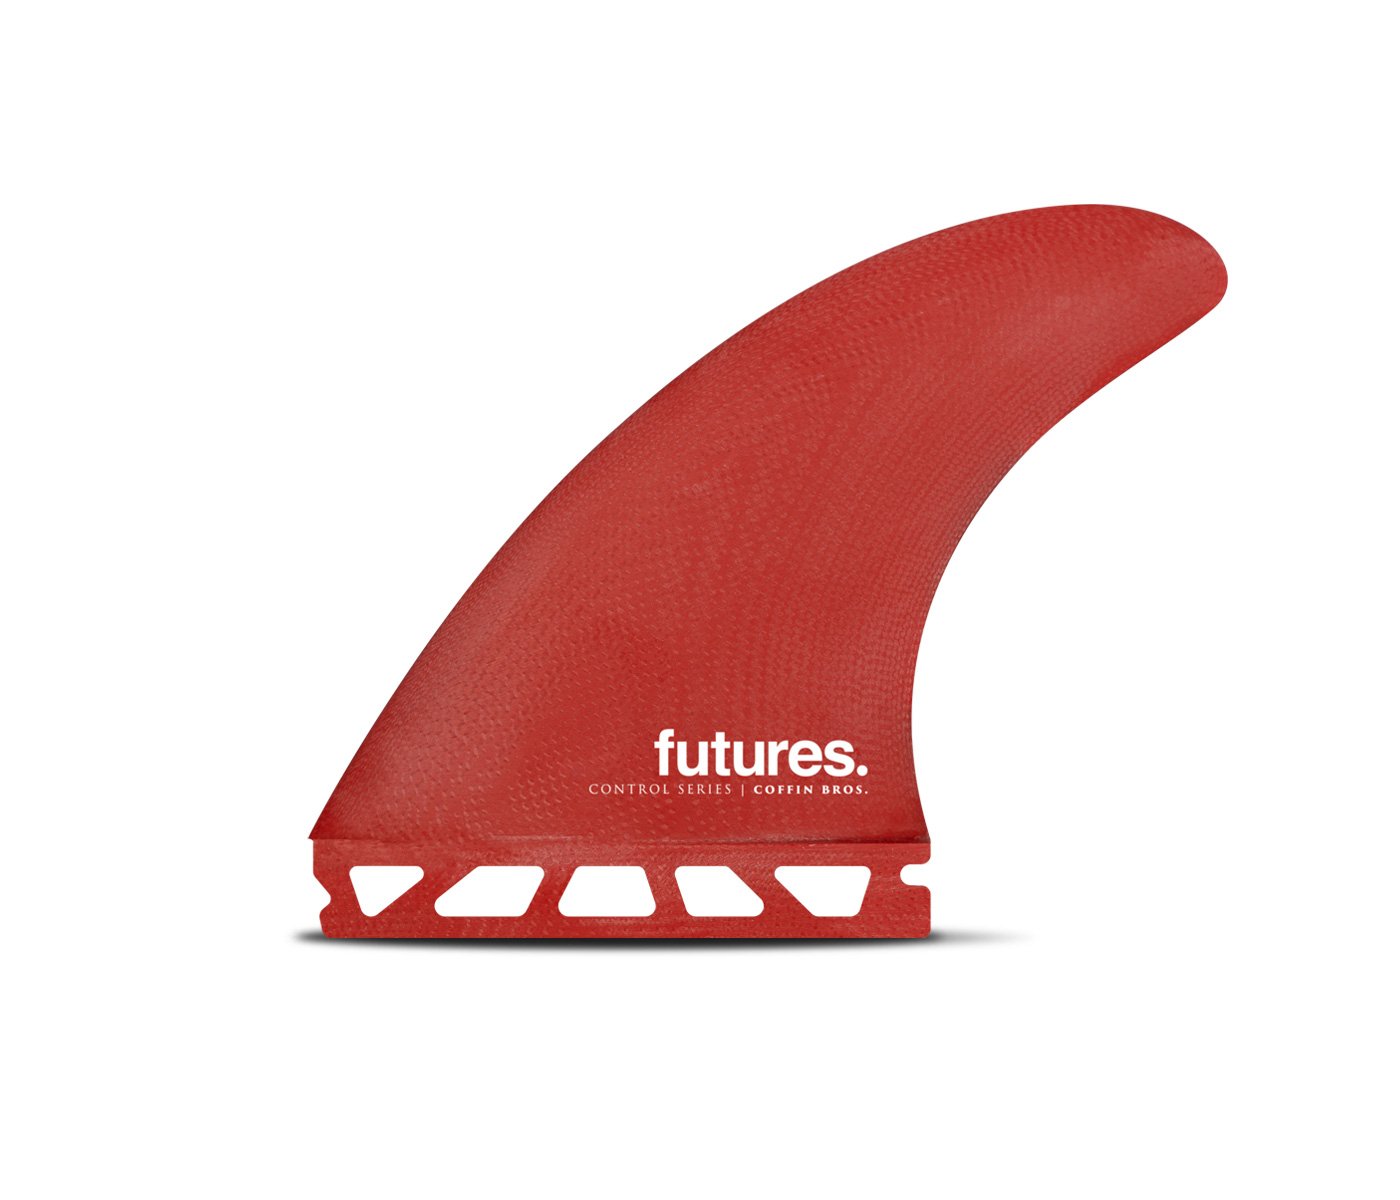 Futures Coffin Bros Medium - Board Store FuturesFins  